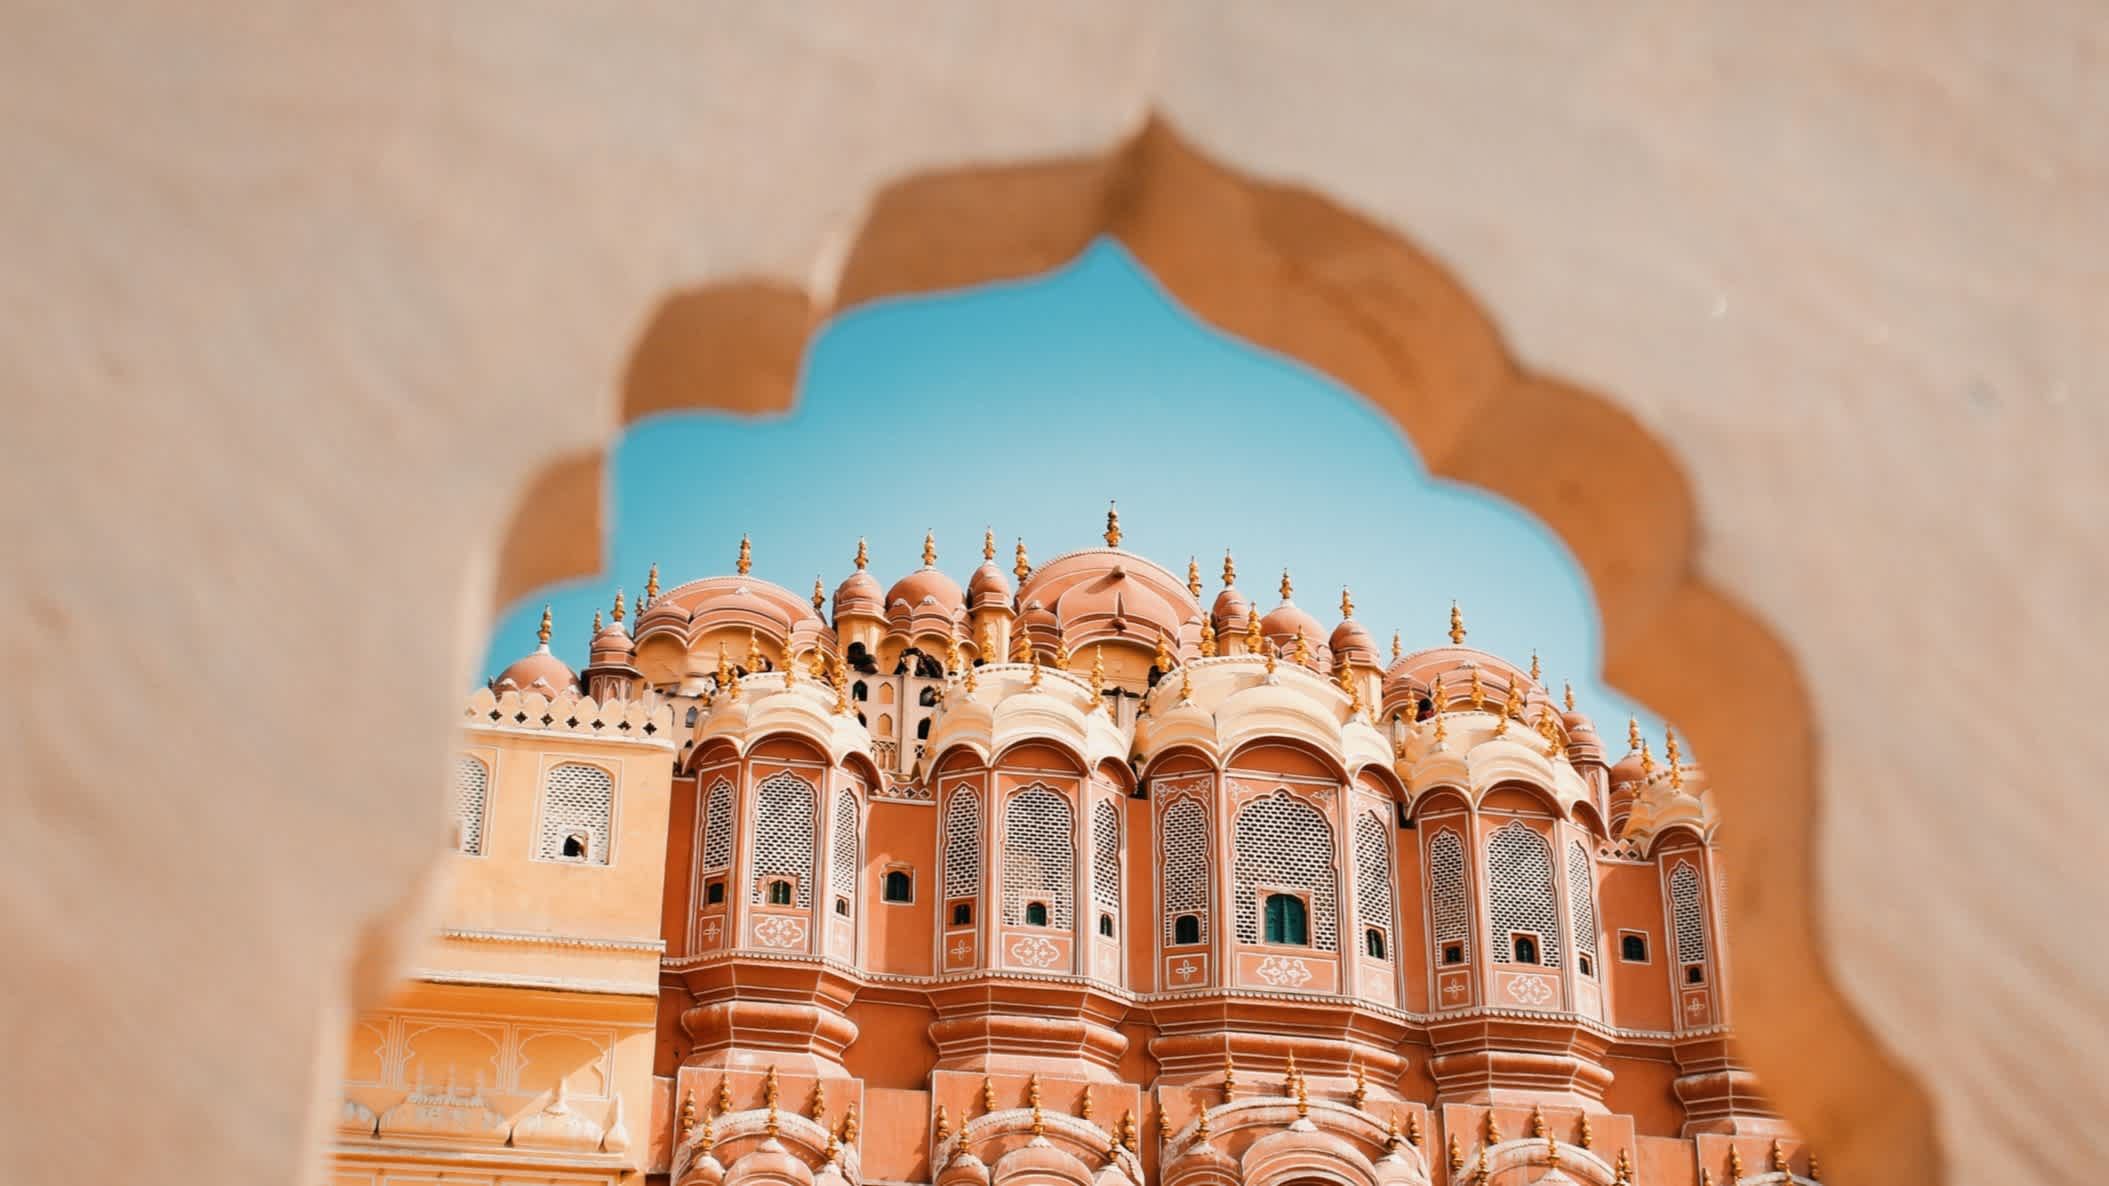 Façade du Hawa Mahal (Palais des Vents) à Jaipur, Inde.